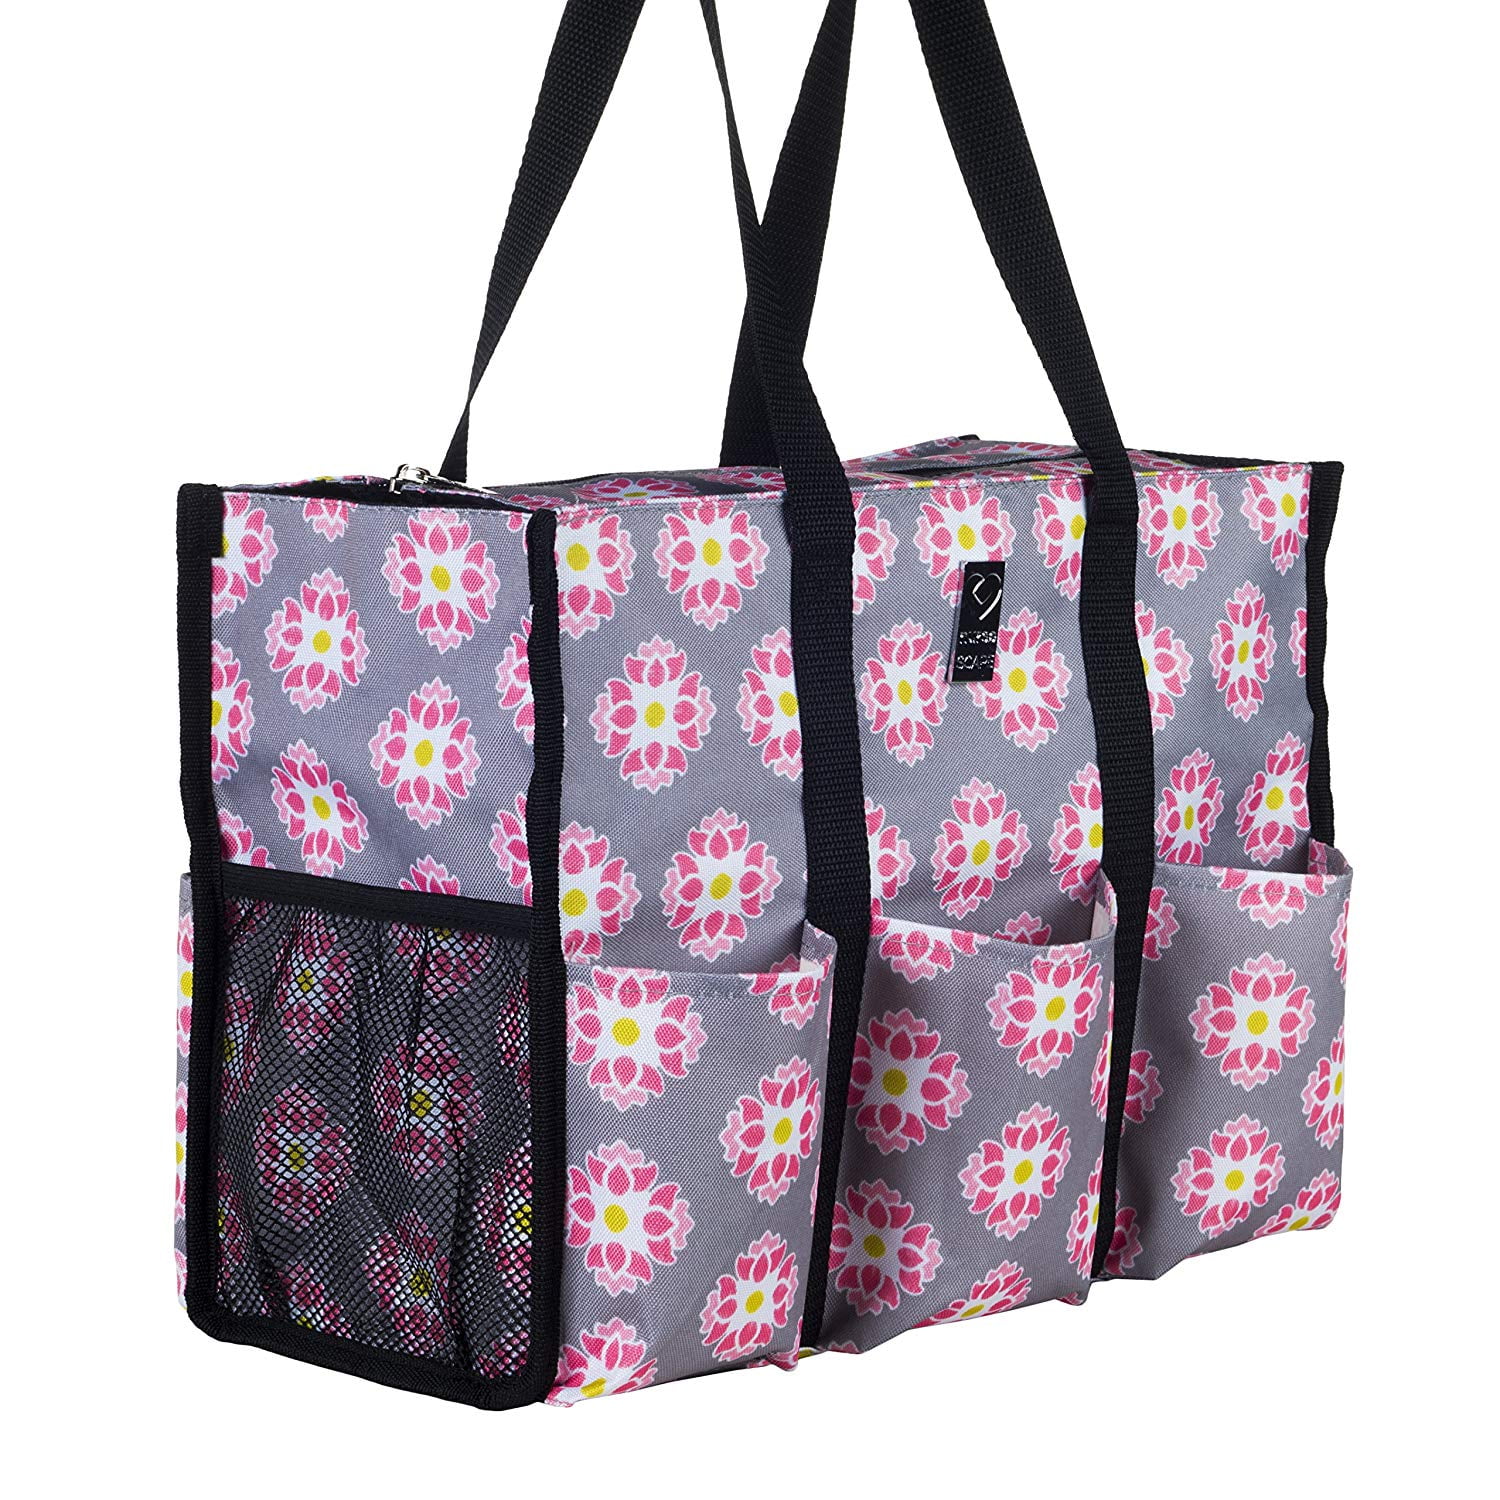 Nursescape Nurse Bag with 13 Exterior & Interior Pockets - Perfect